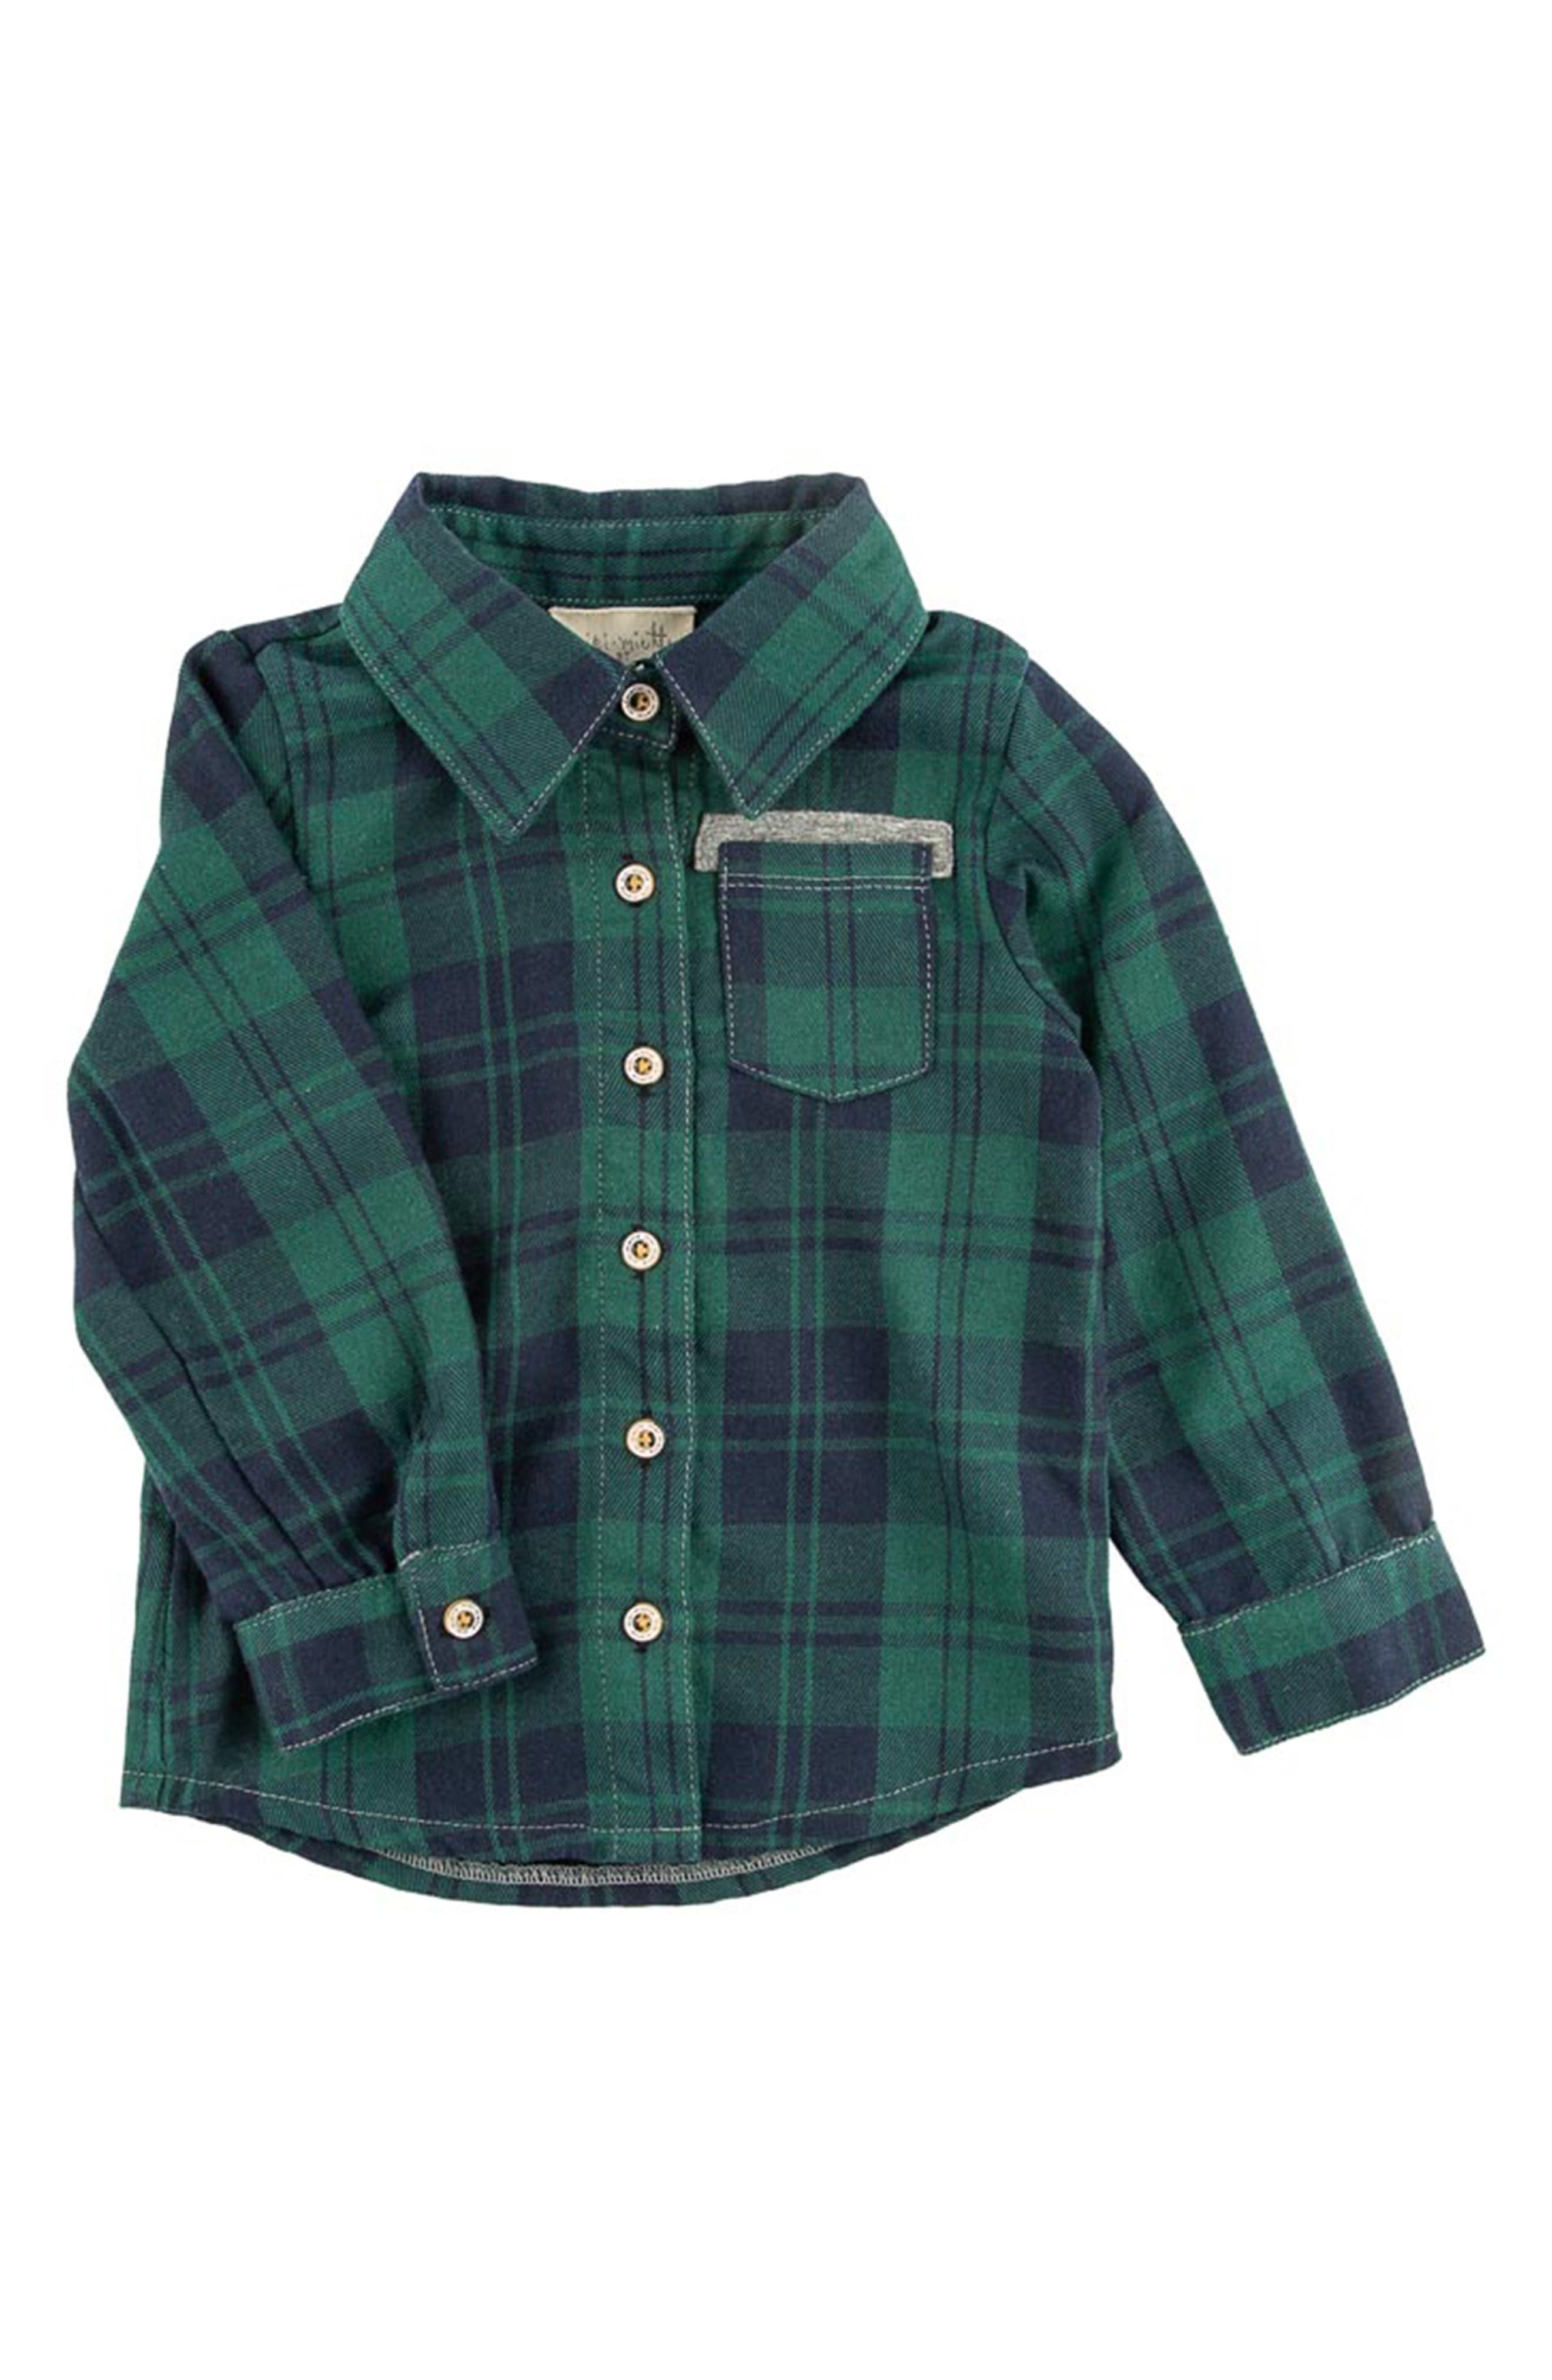 Rolanko Boys Plaid Long Sleeve Shirt Flannel Button-Down Check Shirts for Kids Slim Fit 